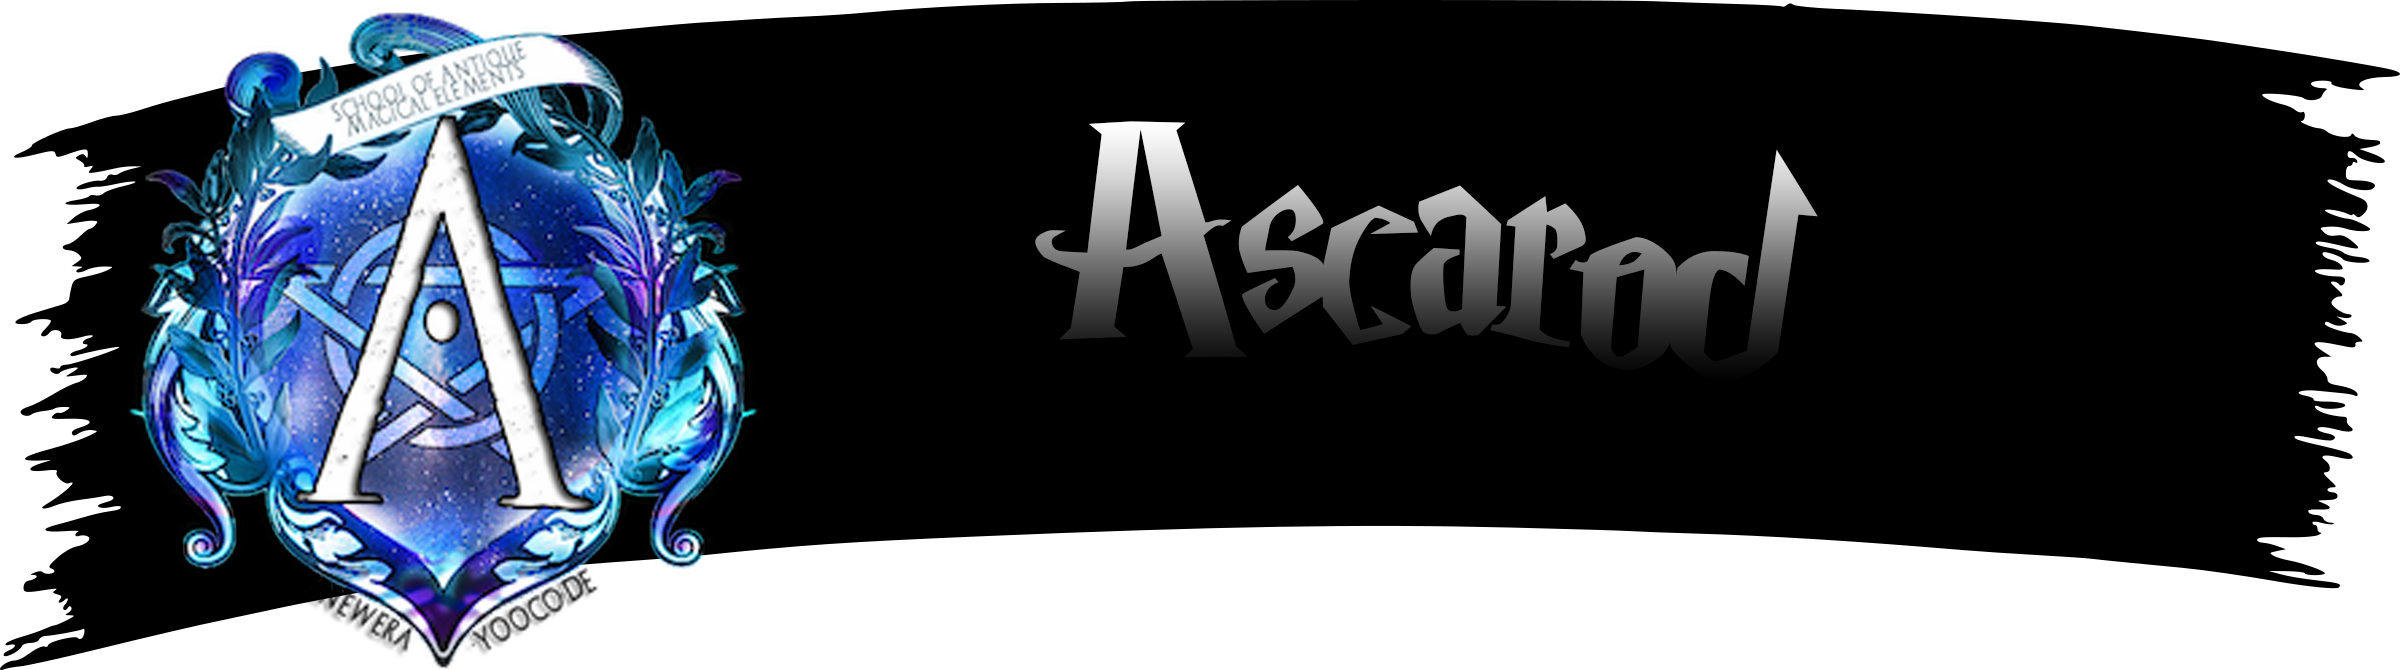 ascaber.png